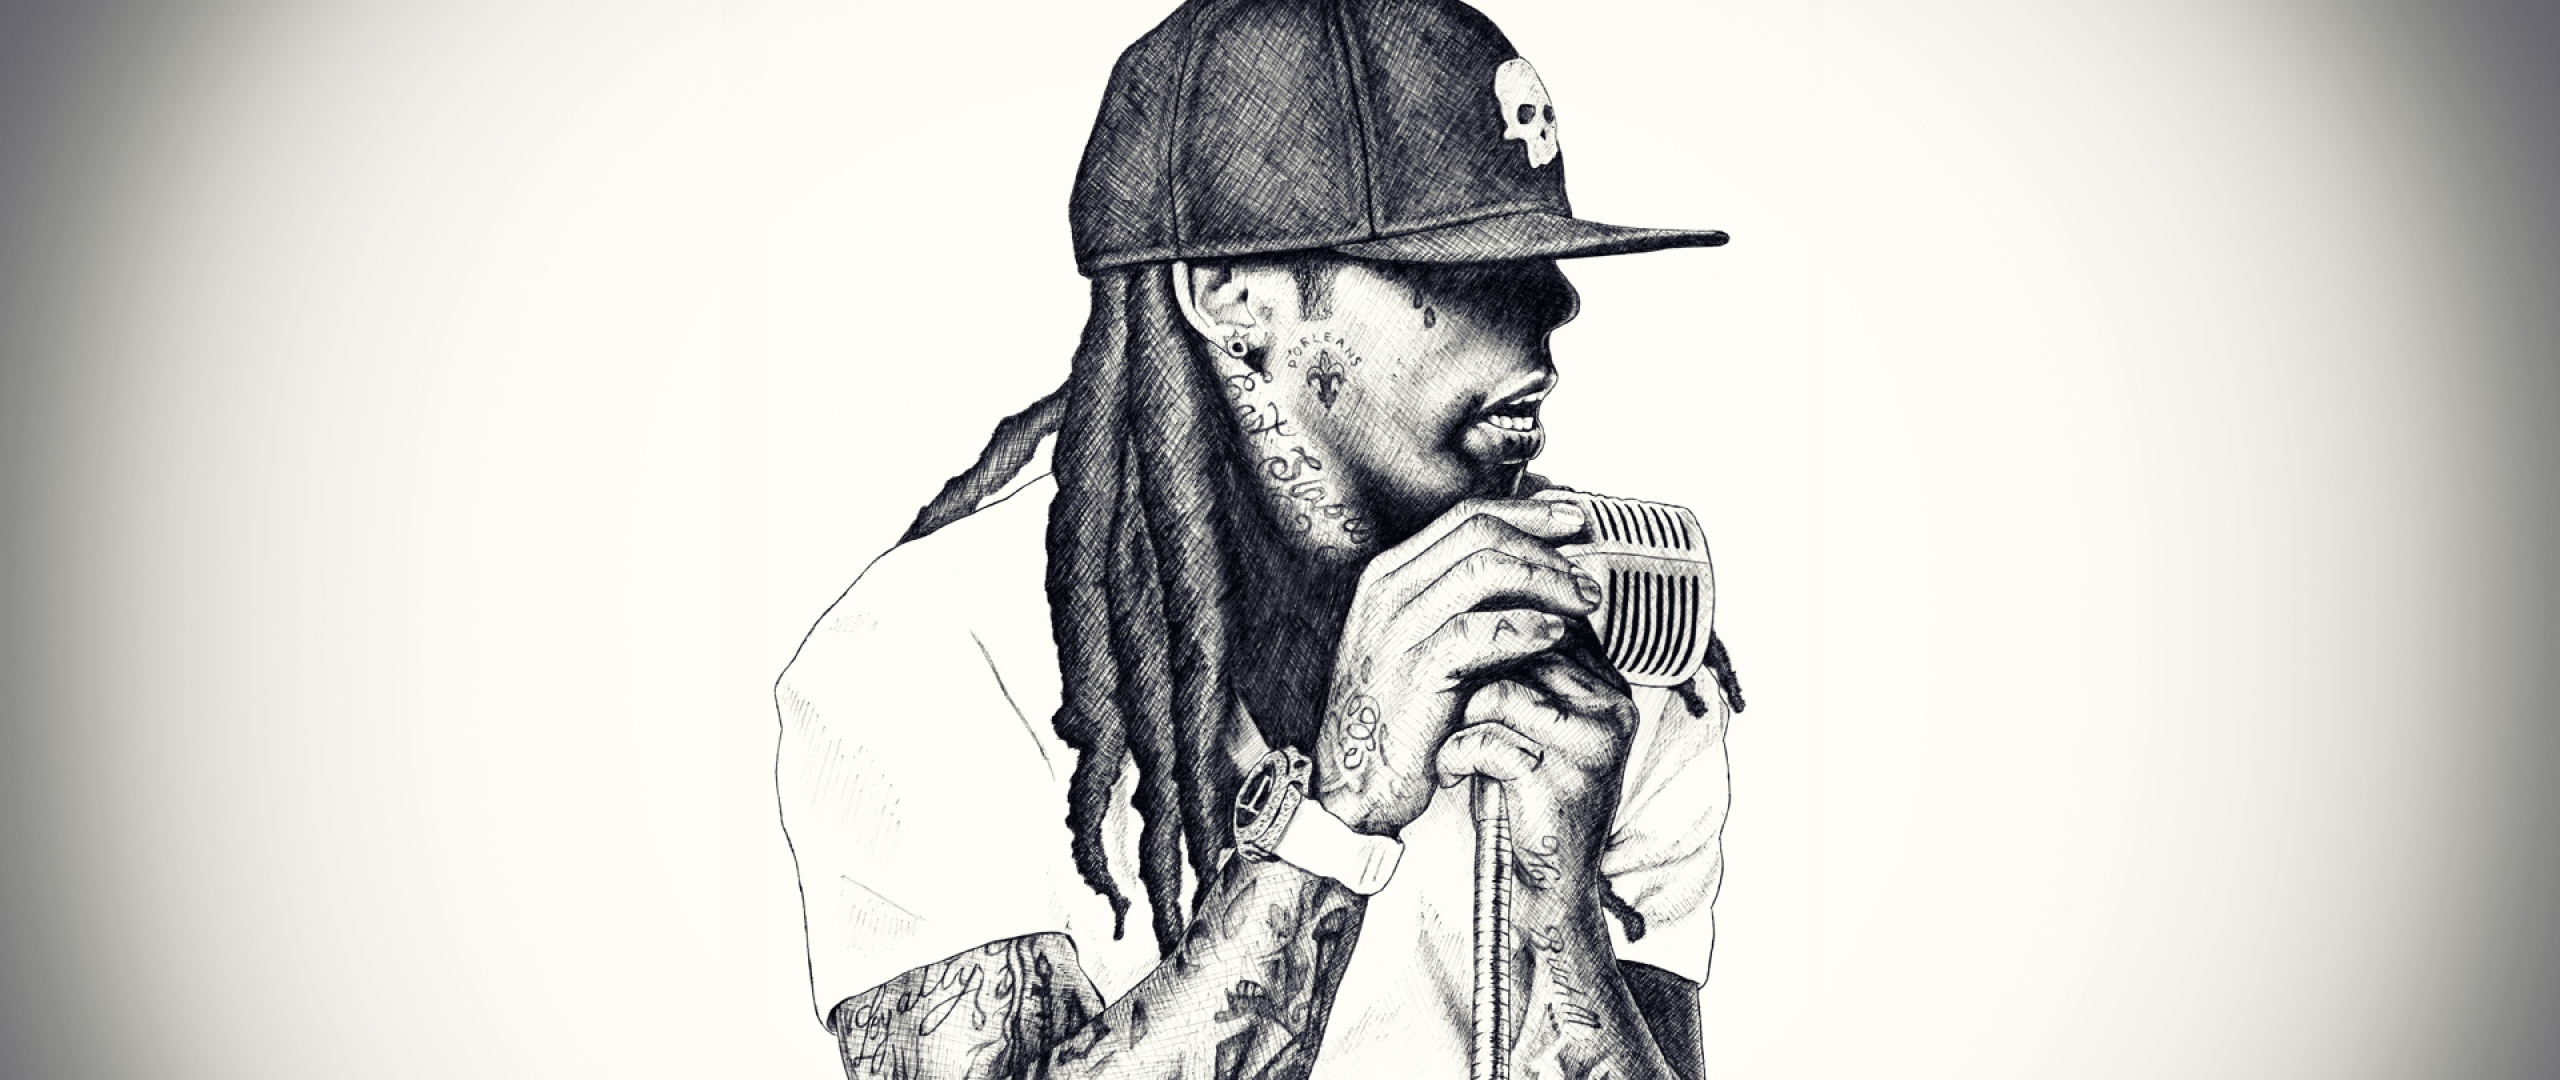 Wallpaper Lil Wayne Rap Singer